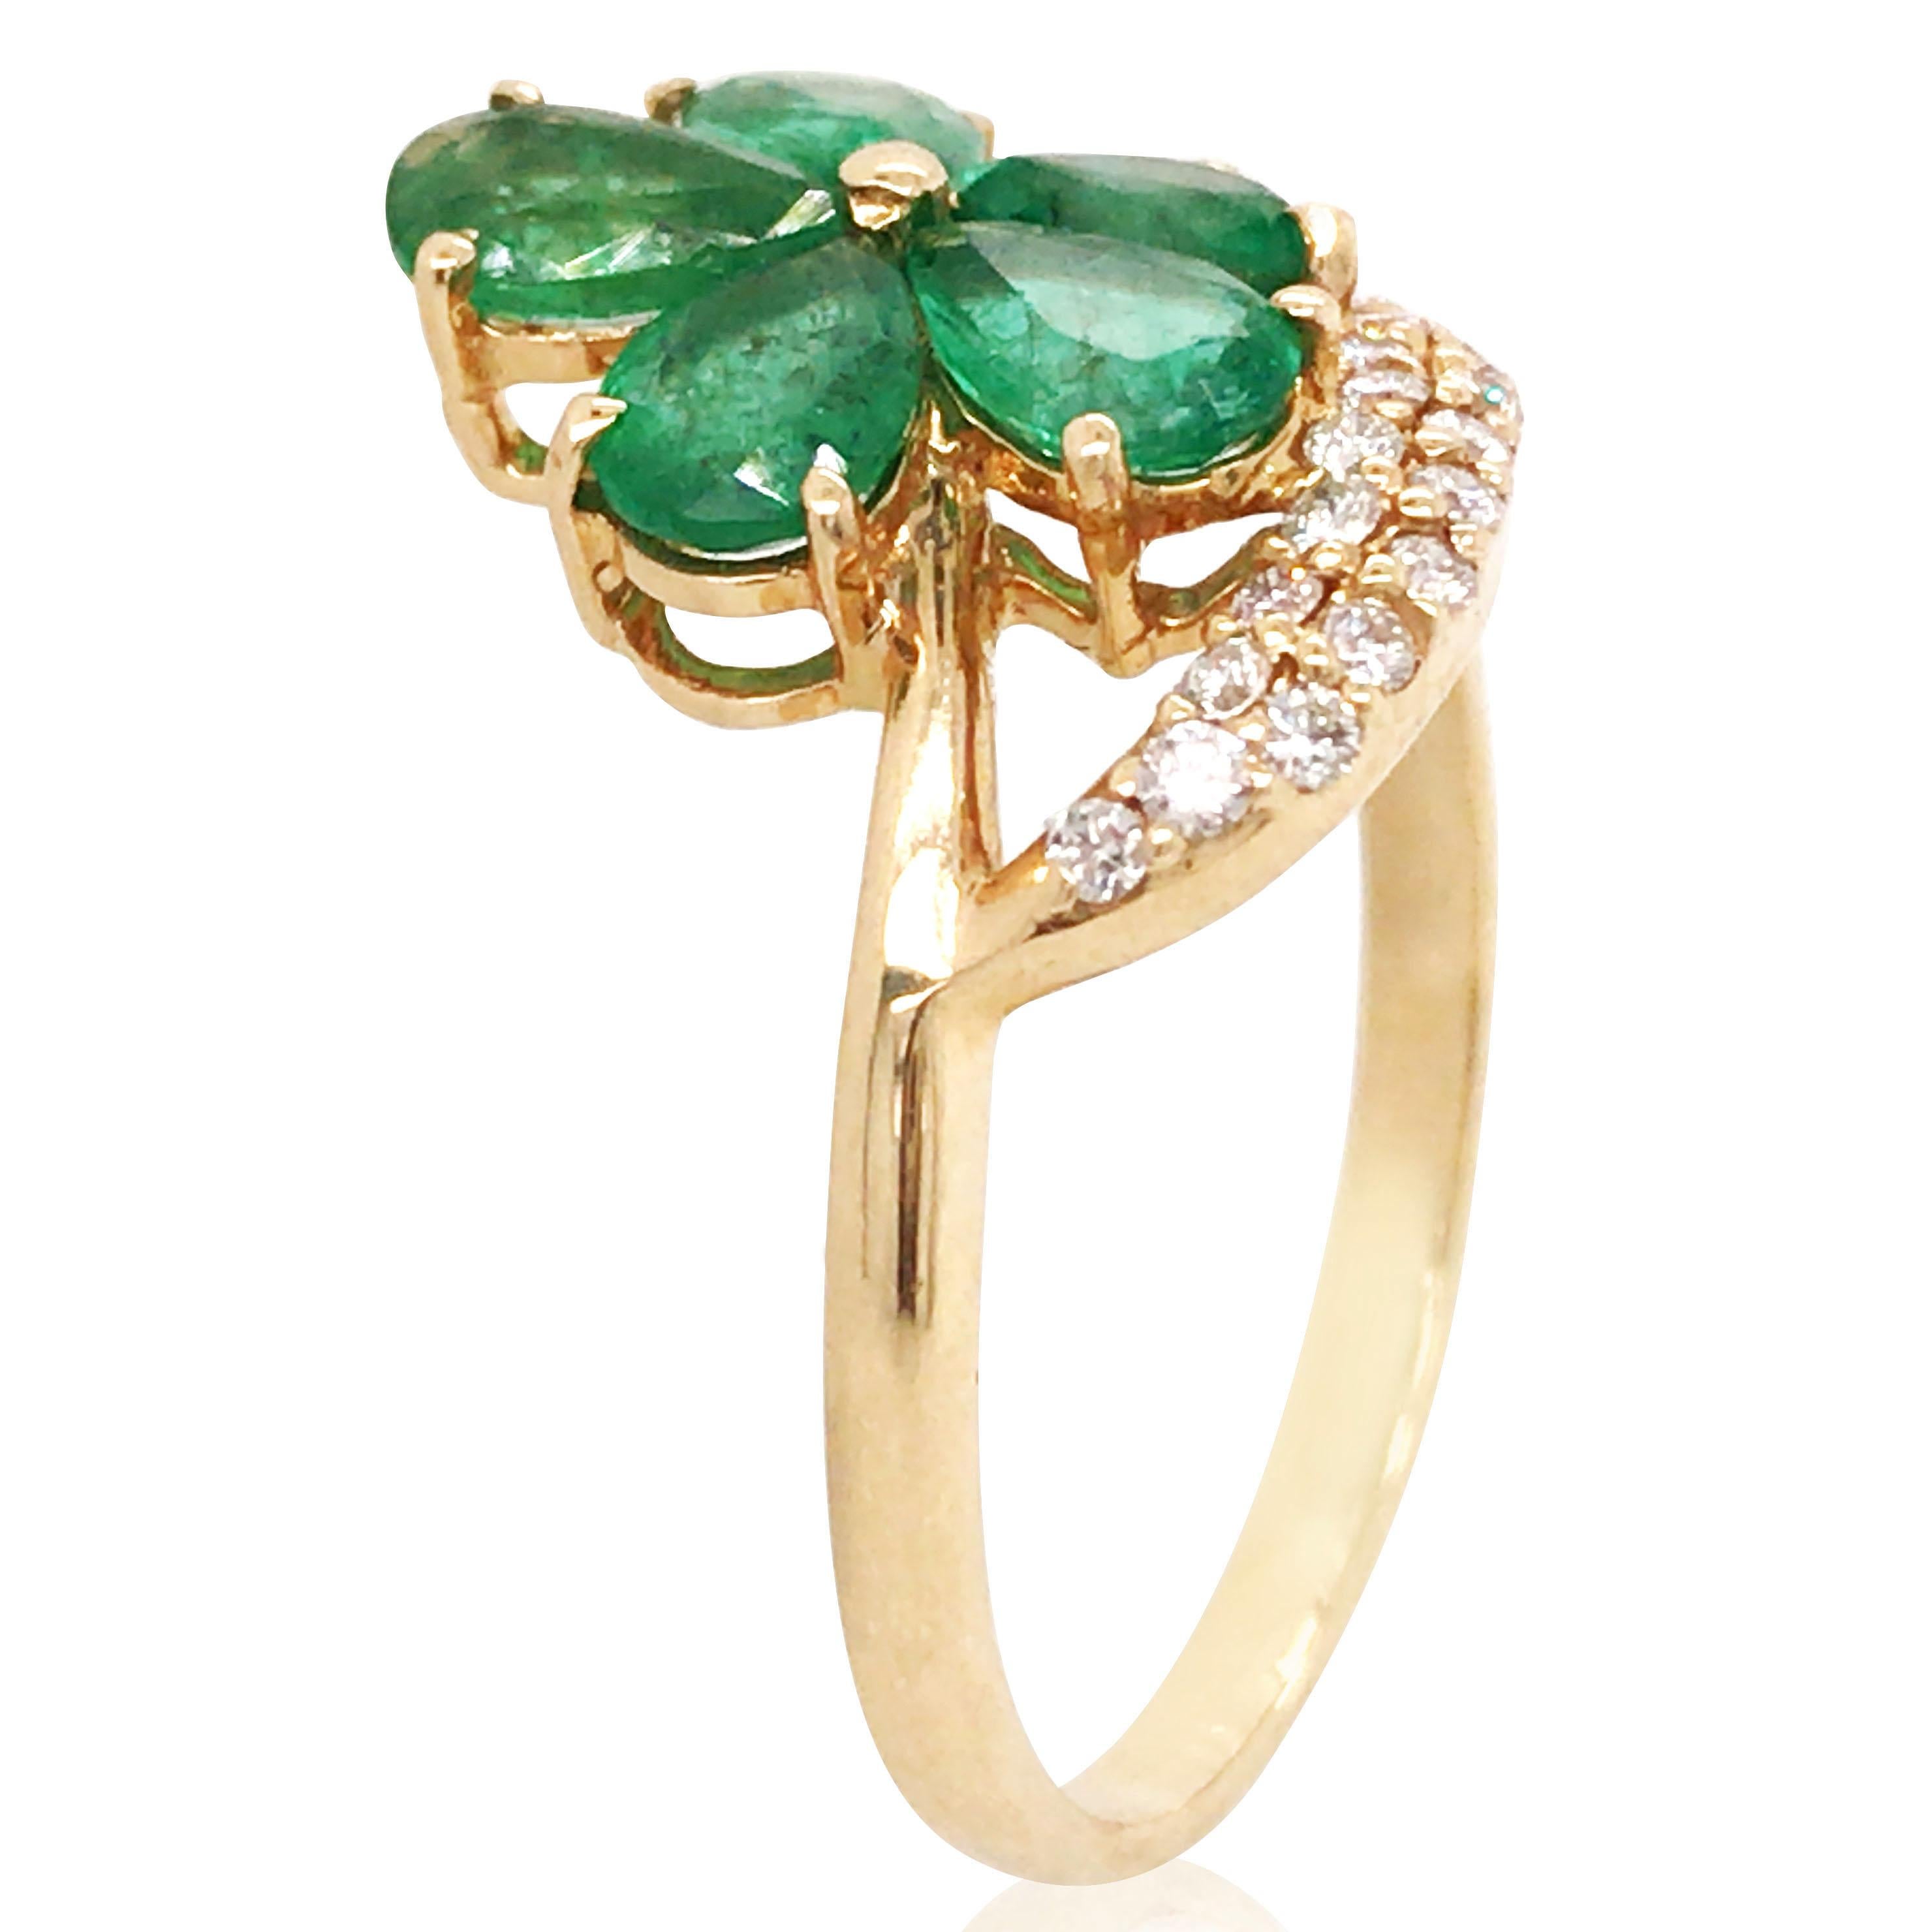 1.80ct Emerald, 0.20ct Diamond. Ring size 8